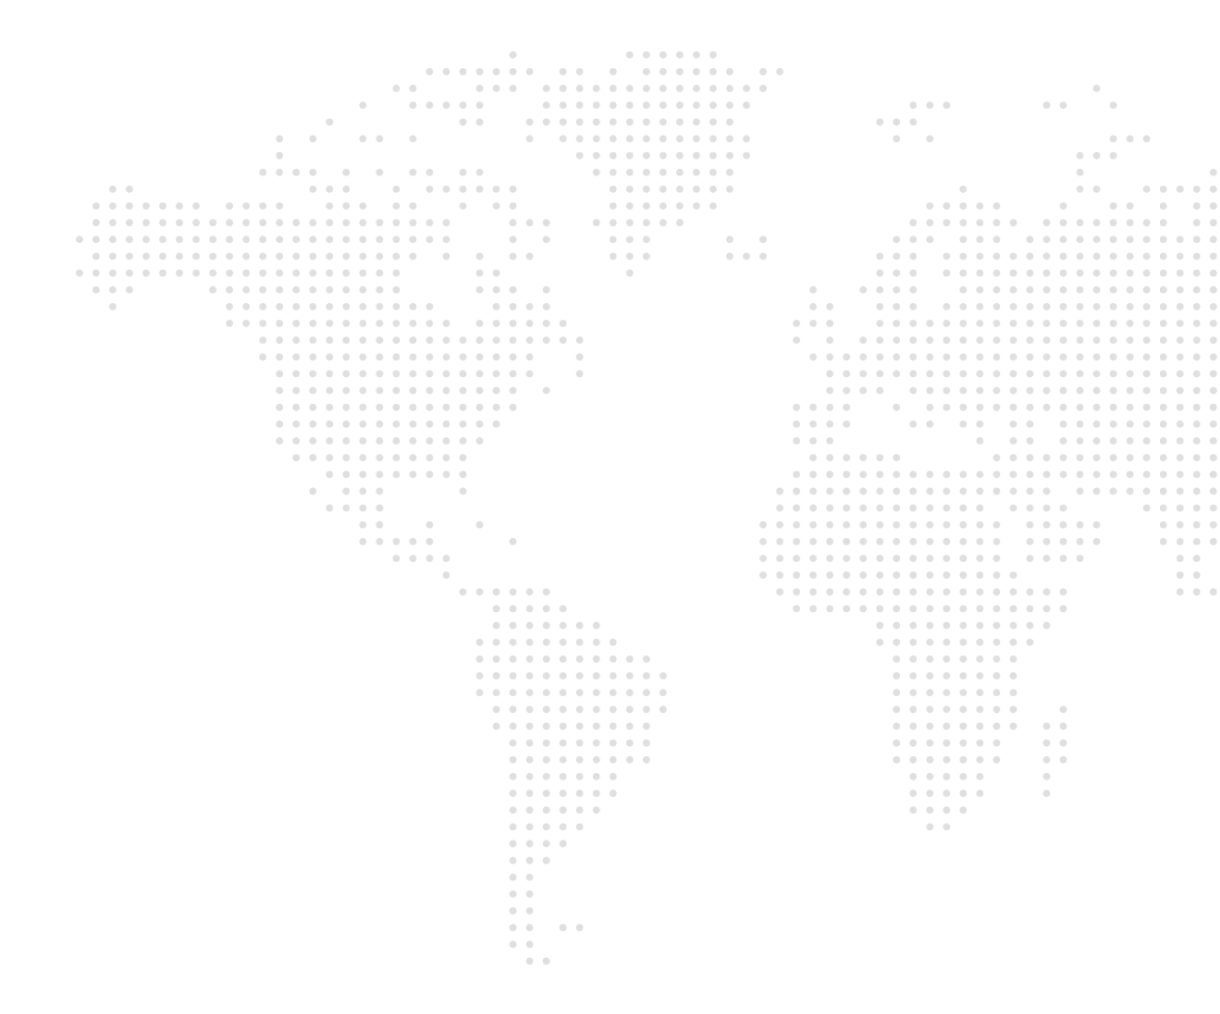 World Map background desktop 2